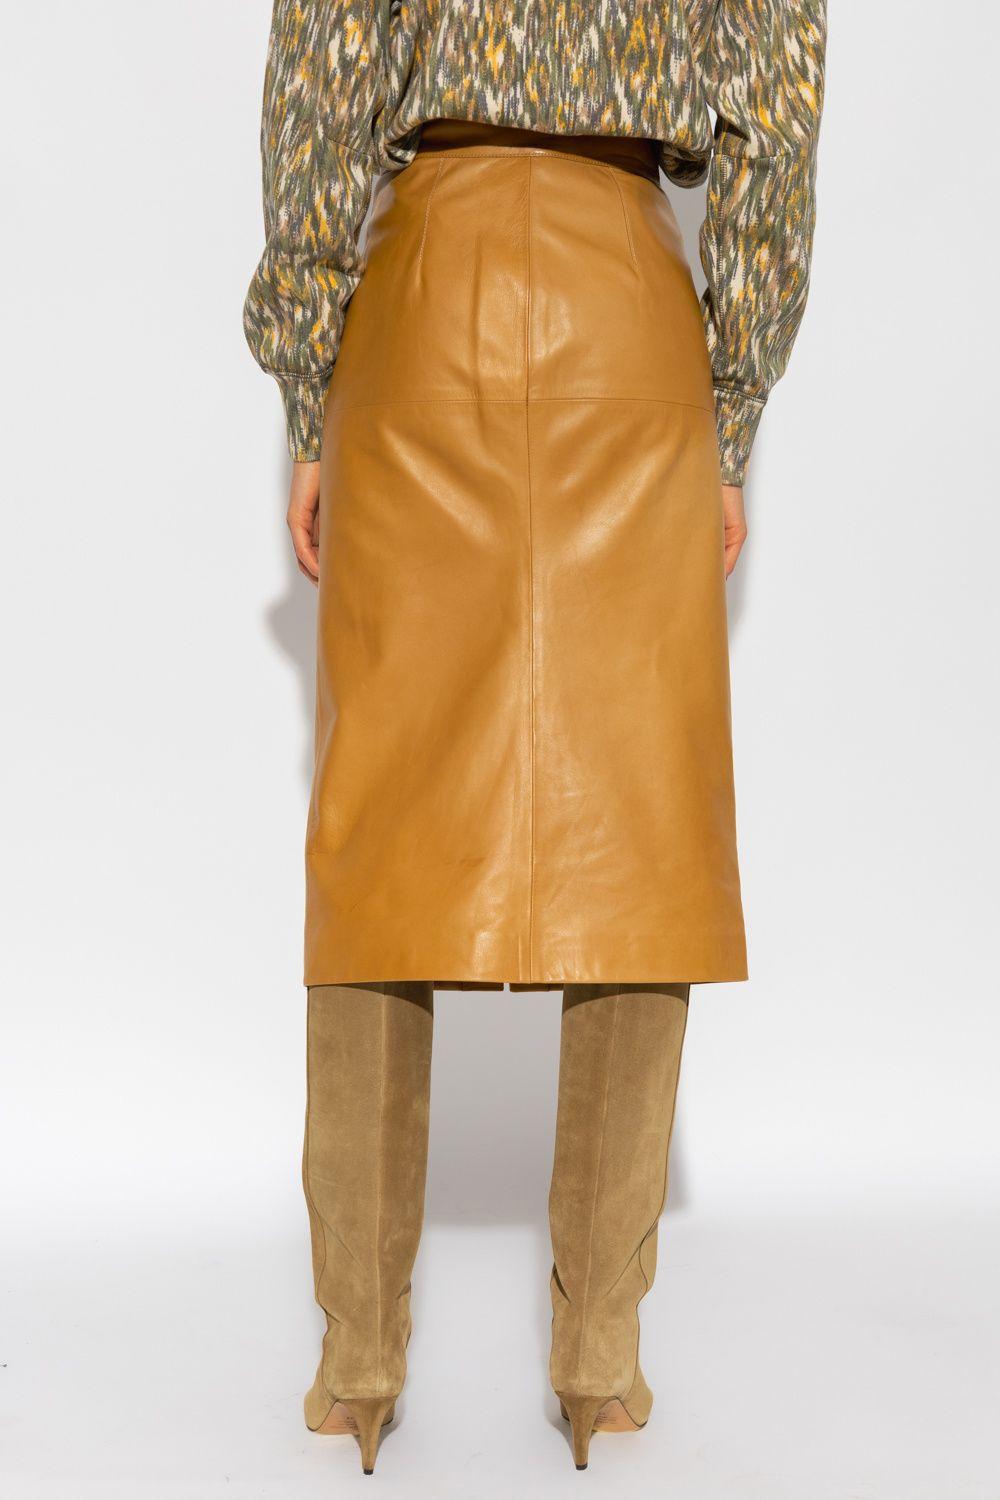 jord disk Svare Isabel Marant 'blehor' Leather Skirt in Natural | Lyst